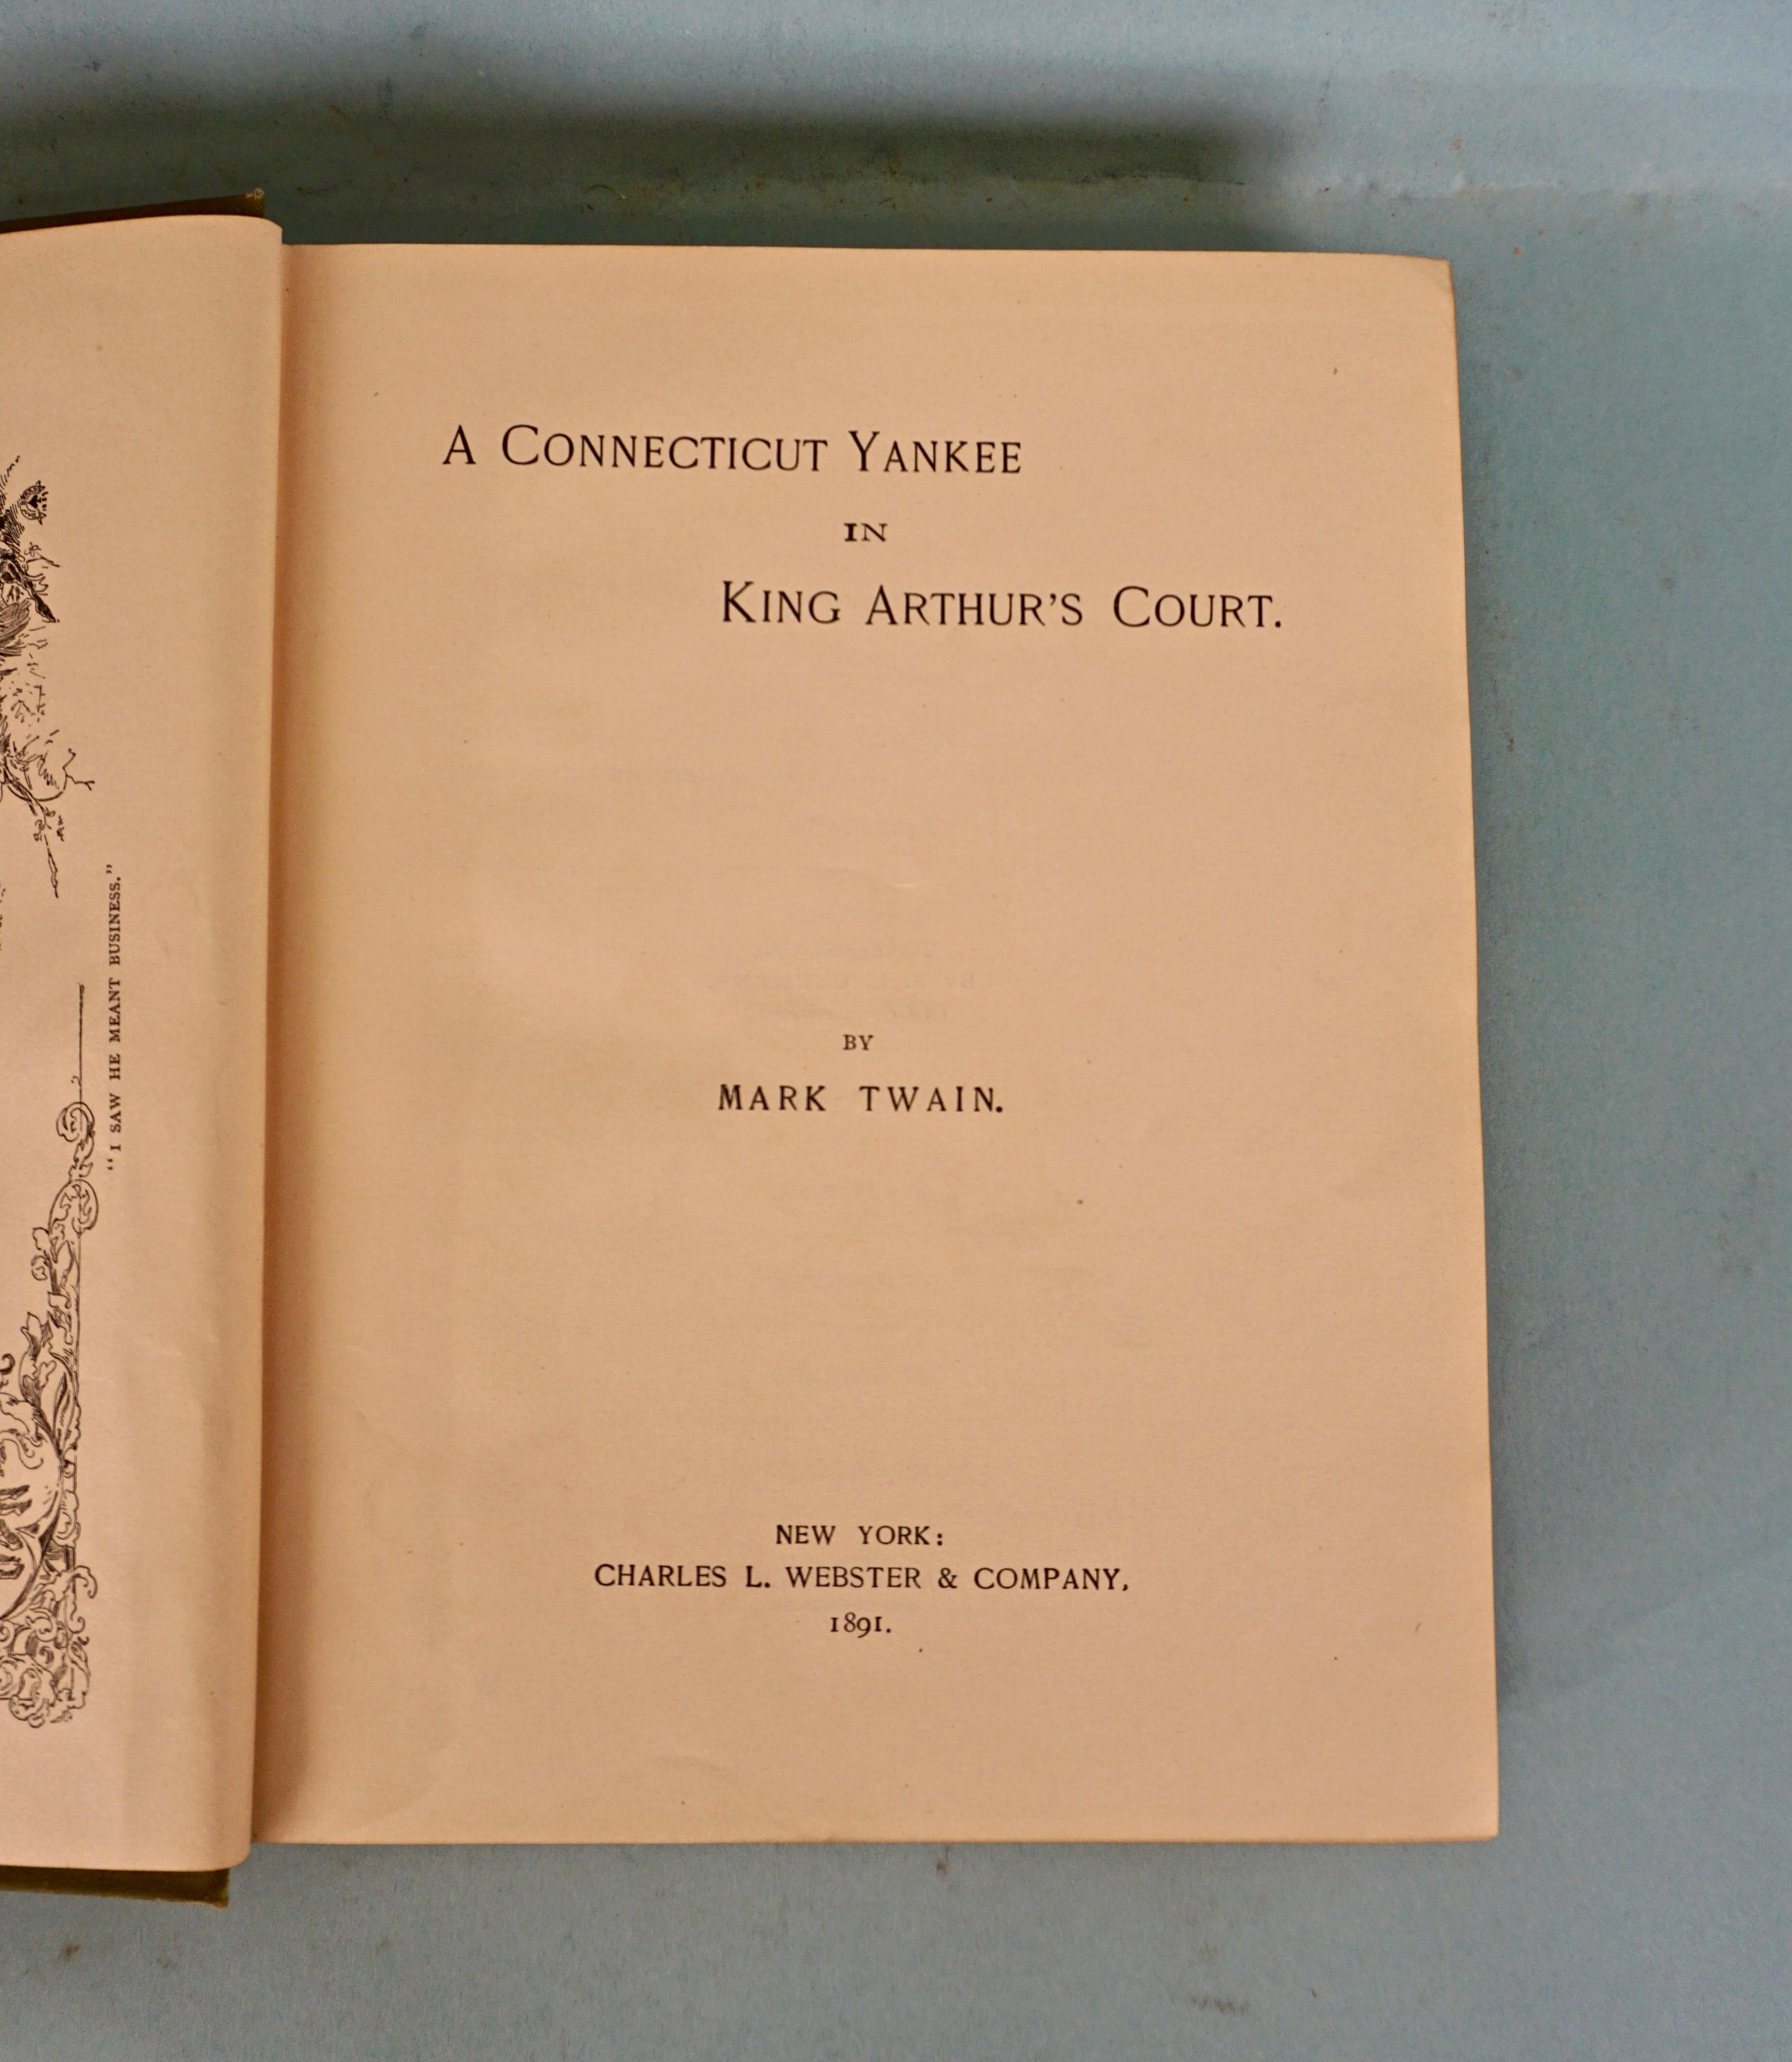 mark twain collection 1917